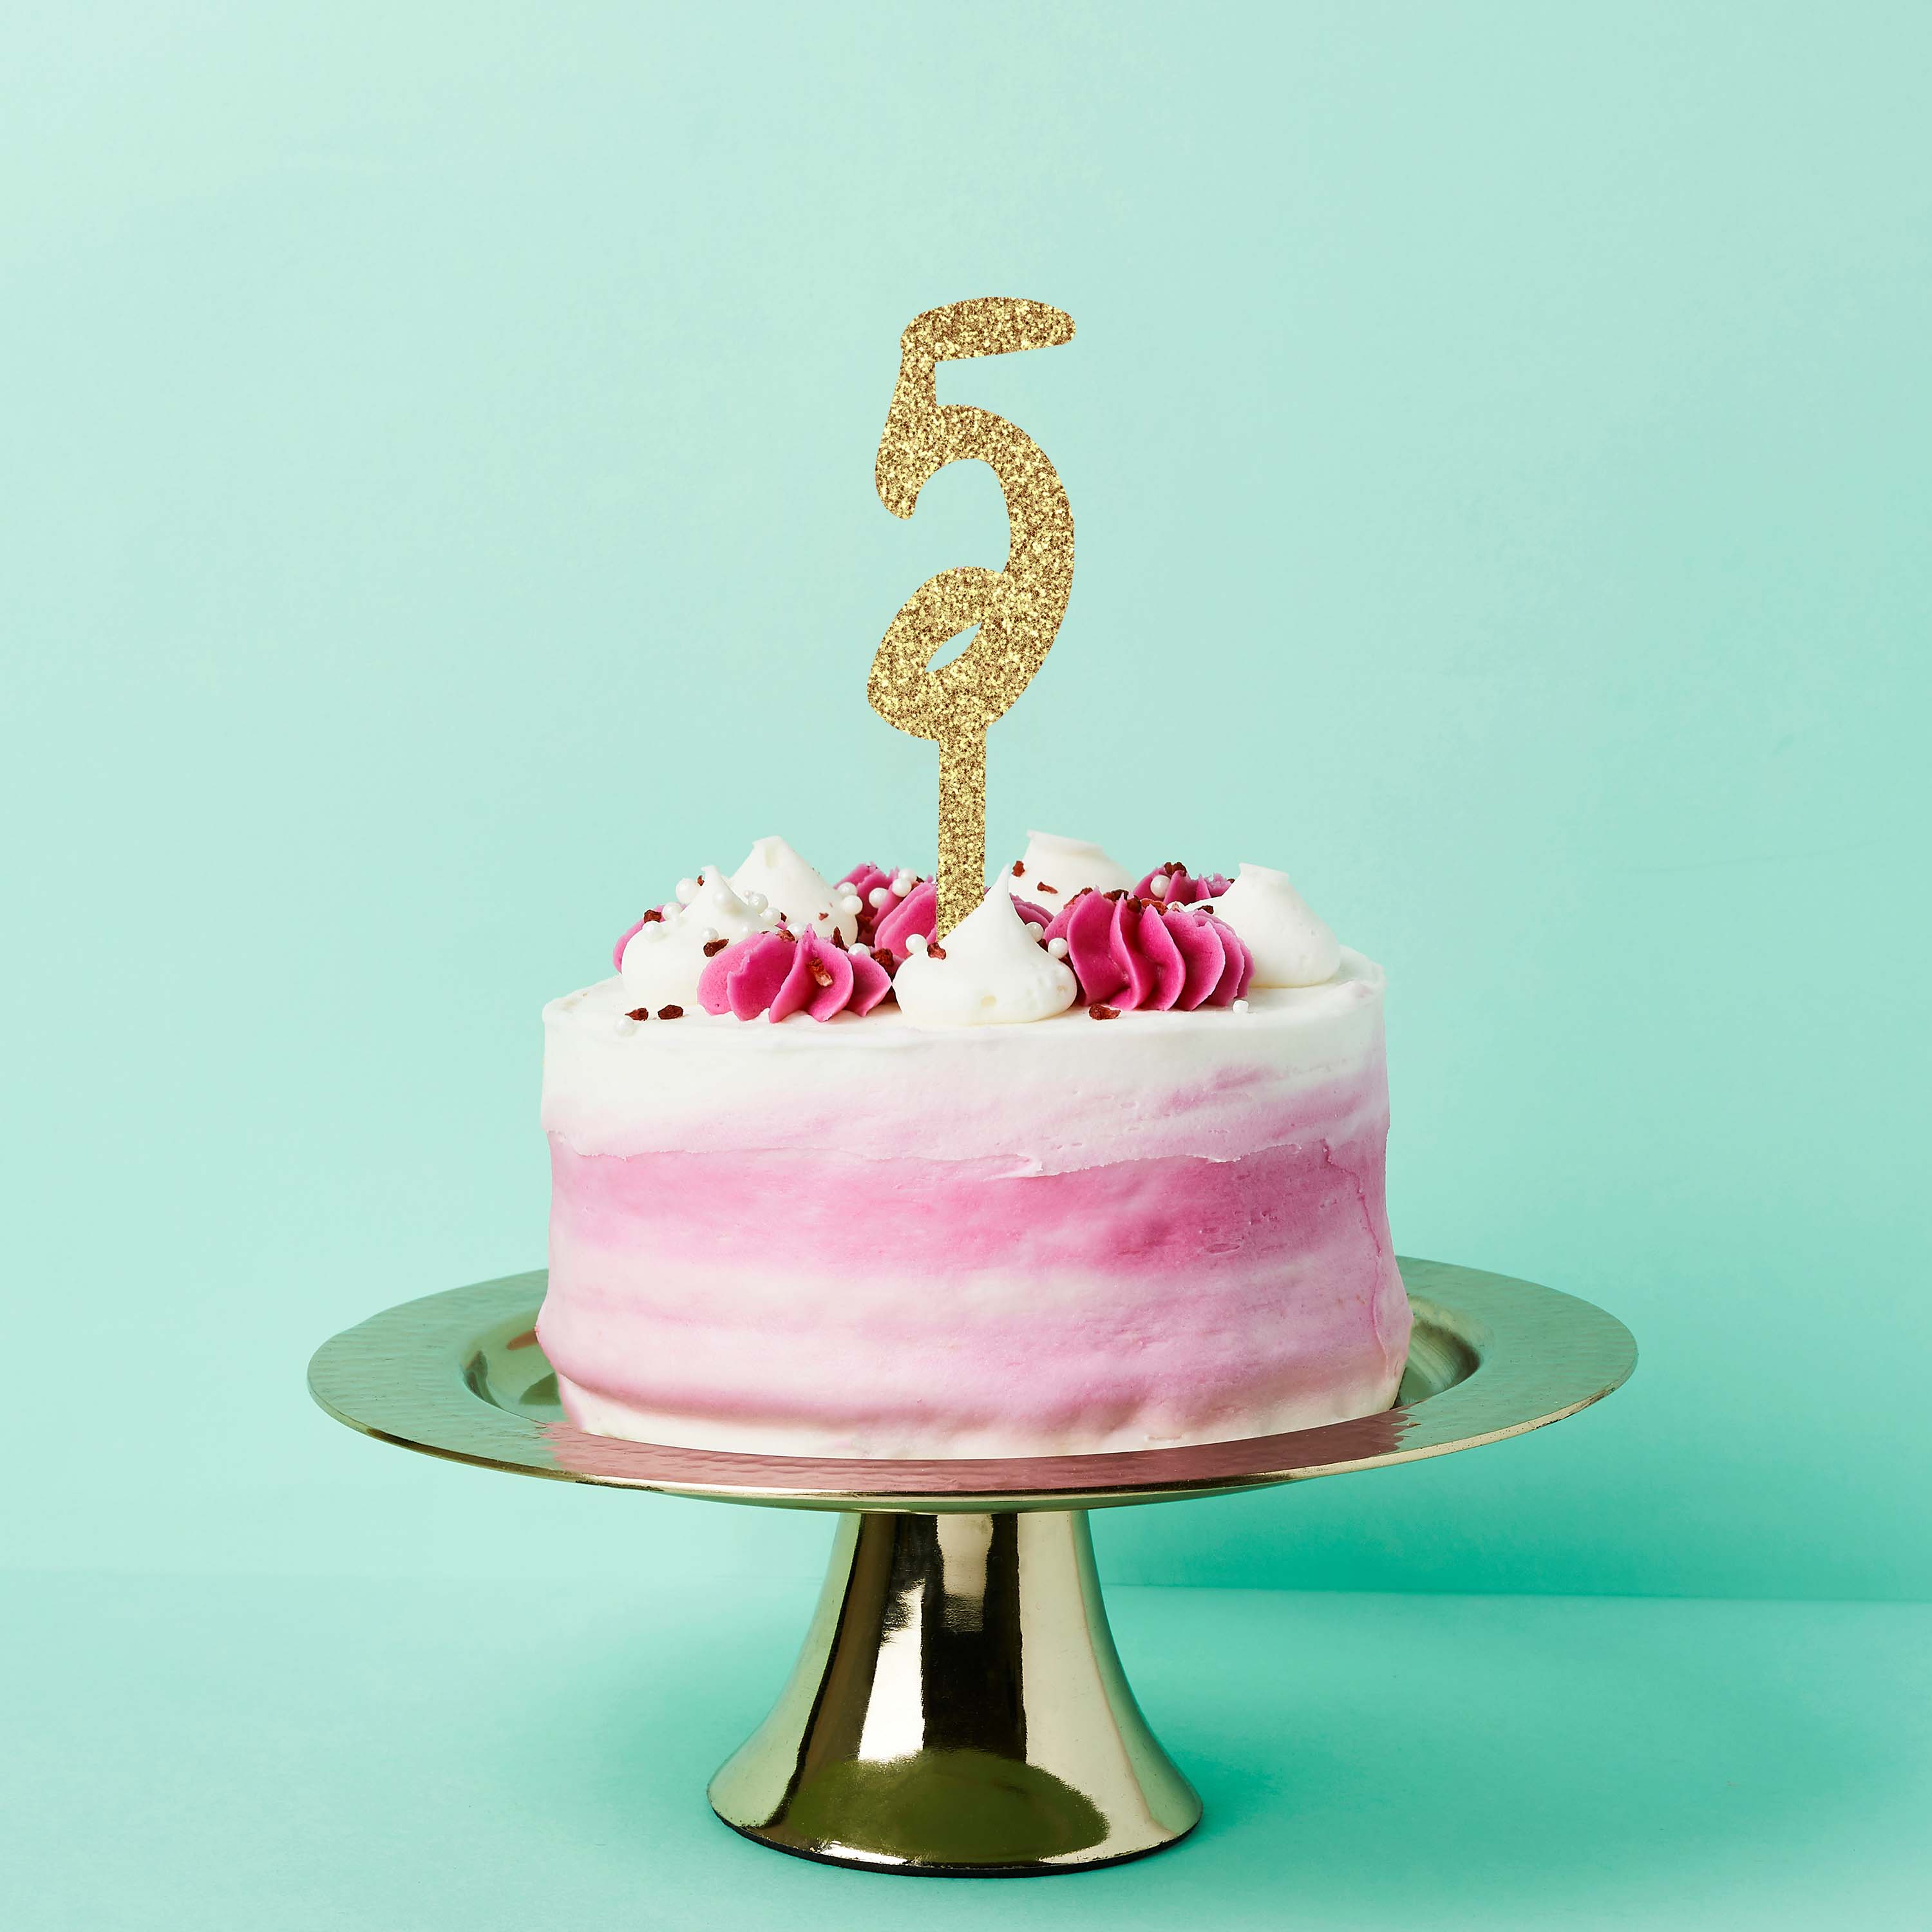 Number Cake | Cake Trays